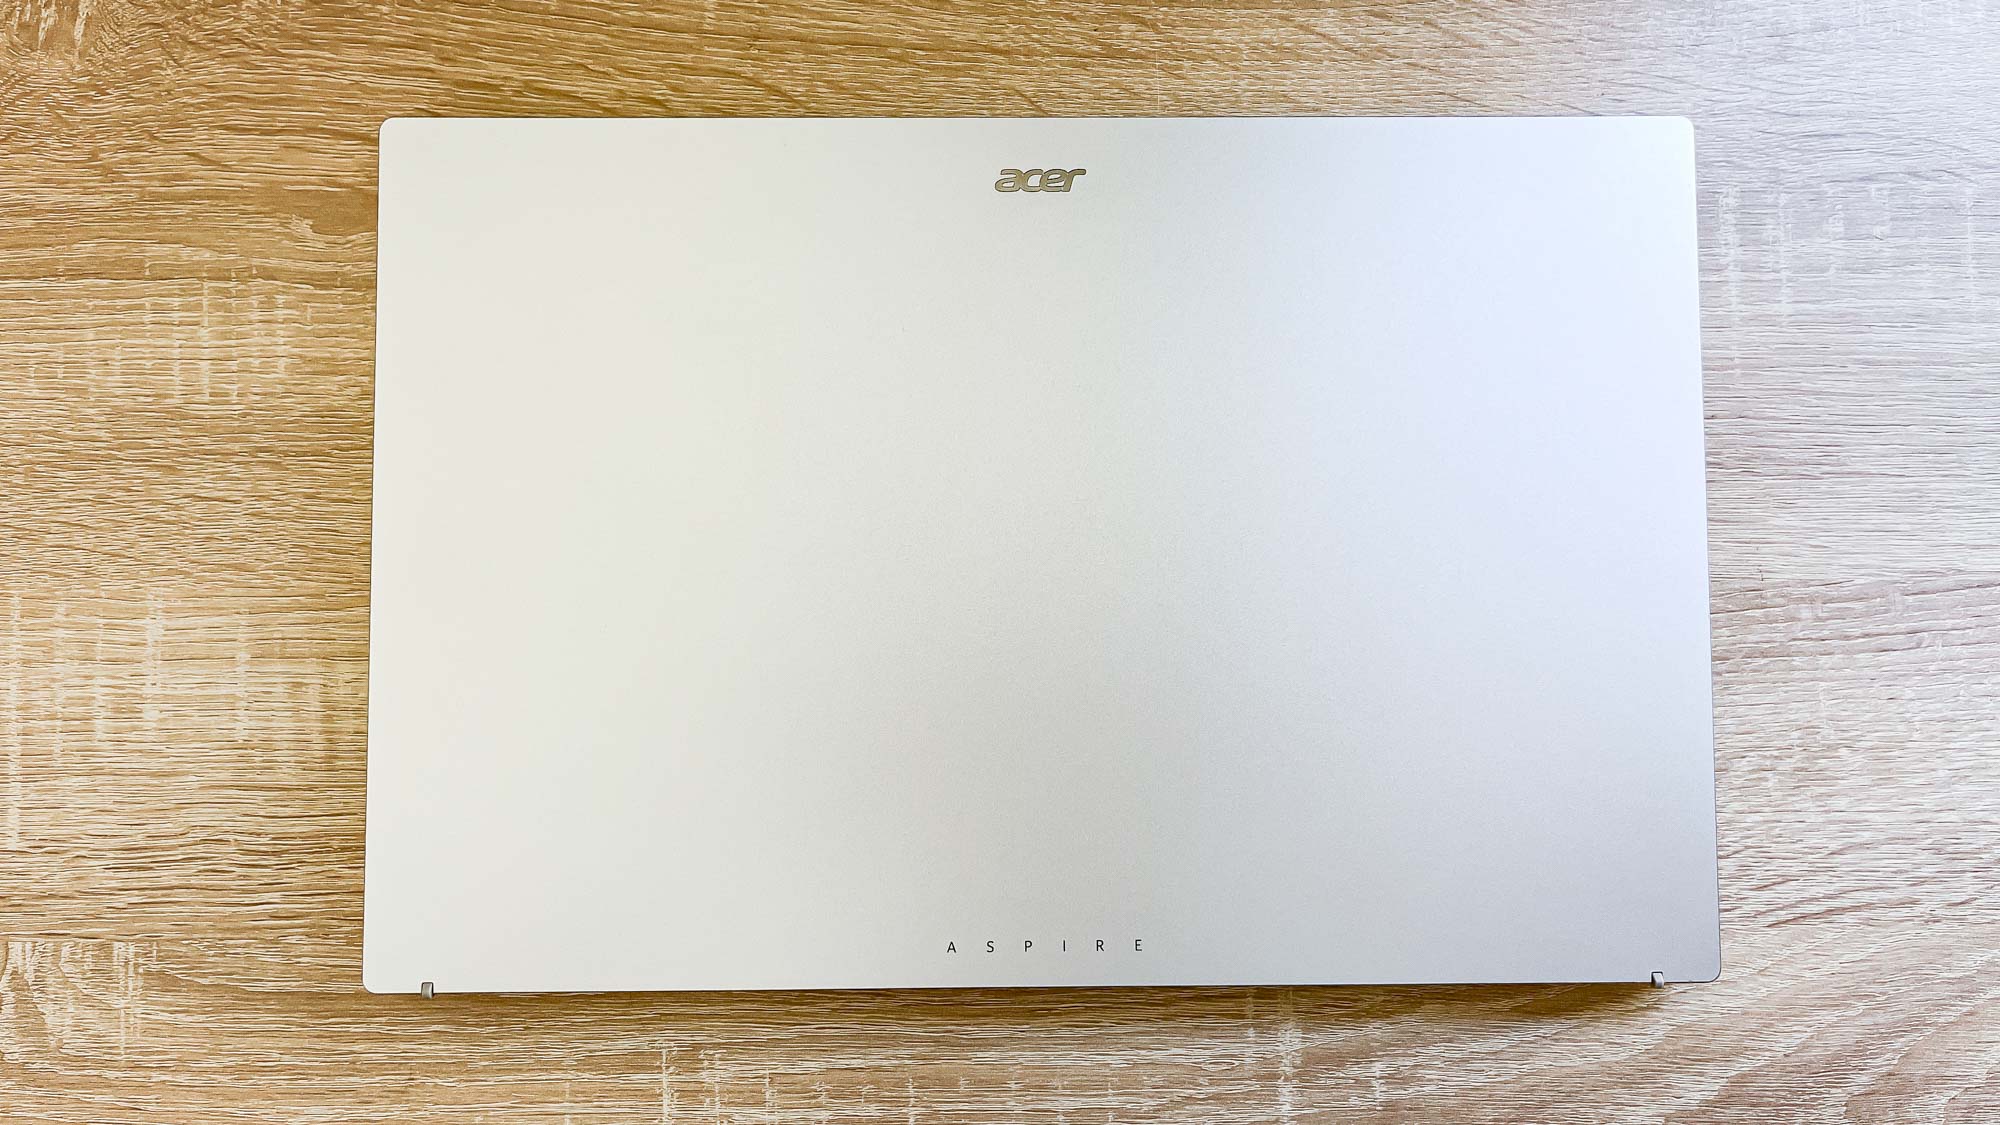 Acer Aspire Go 15 review unit on desk